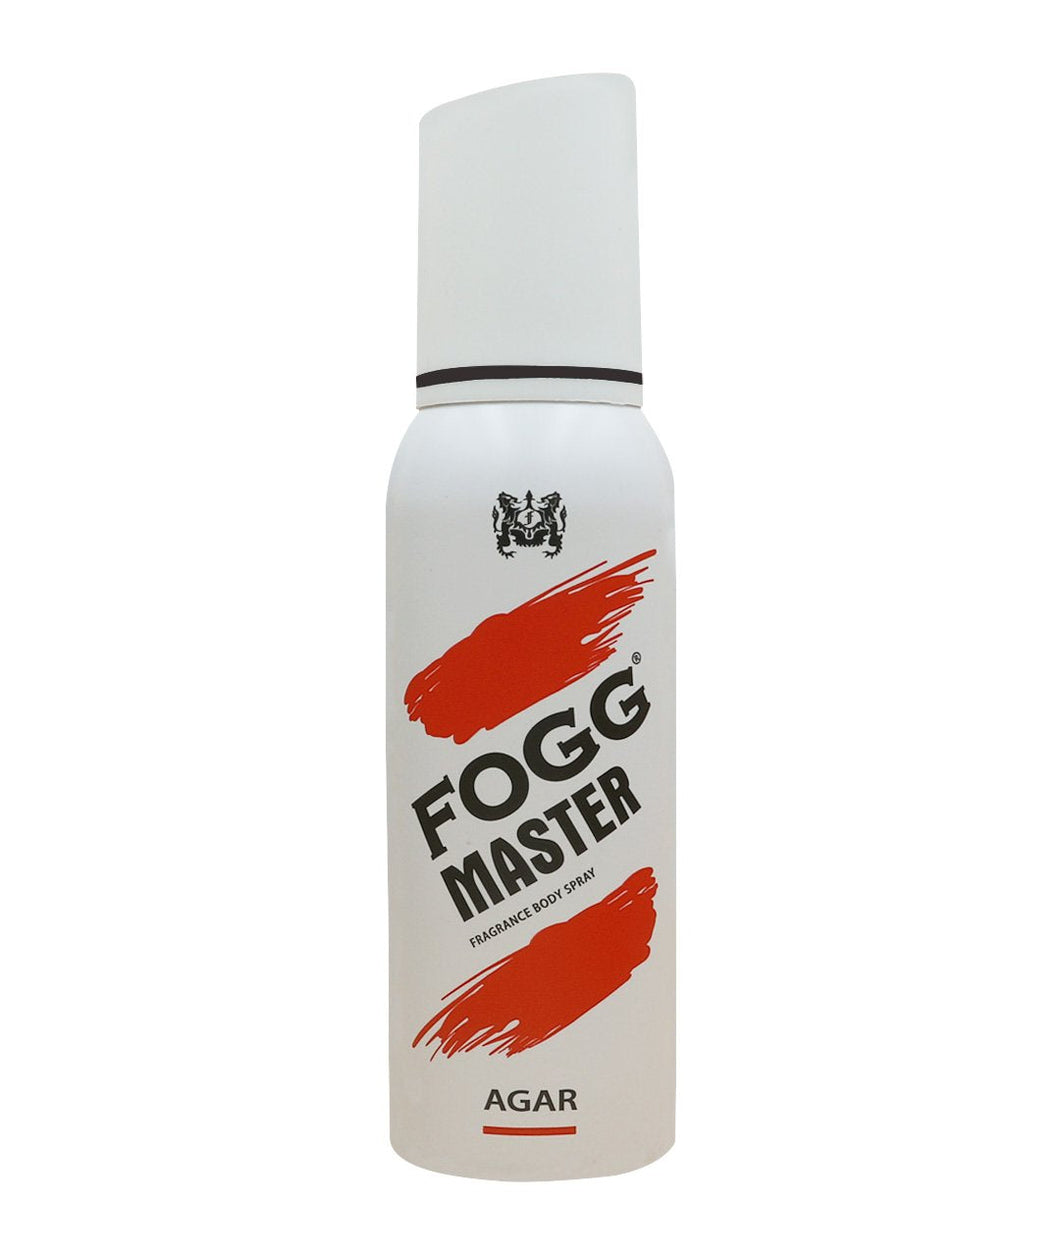 FOGG Fragrance Body Spray - Master - Agar